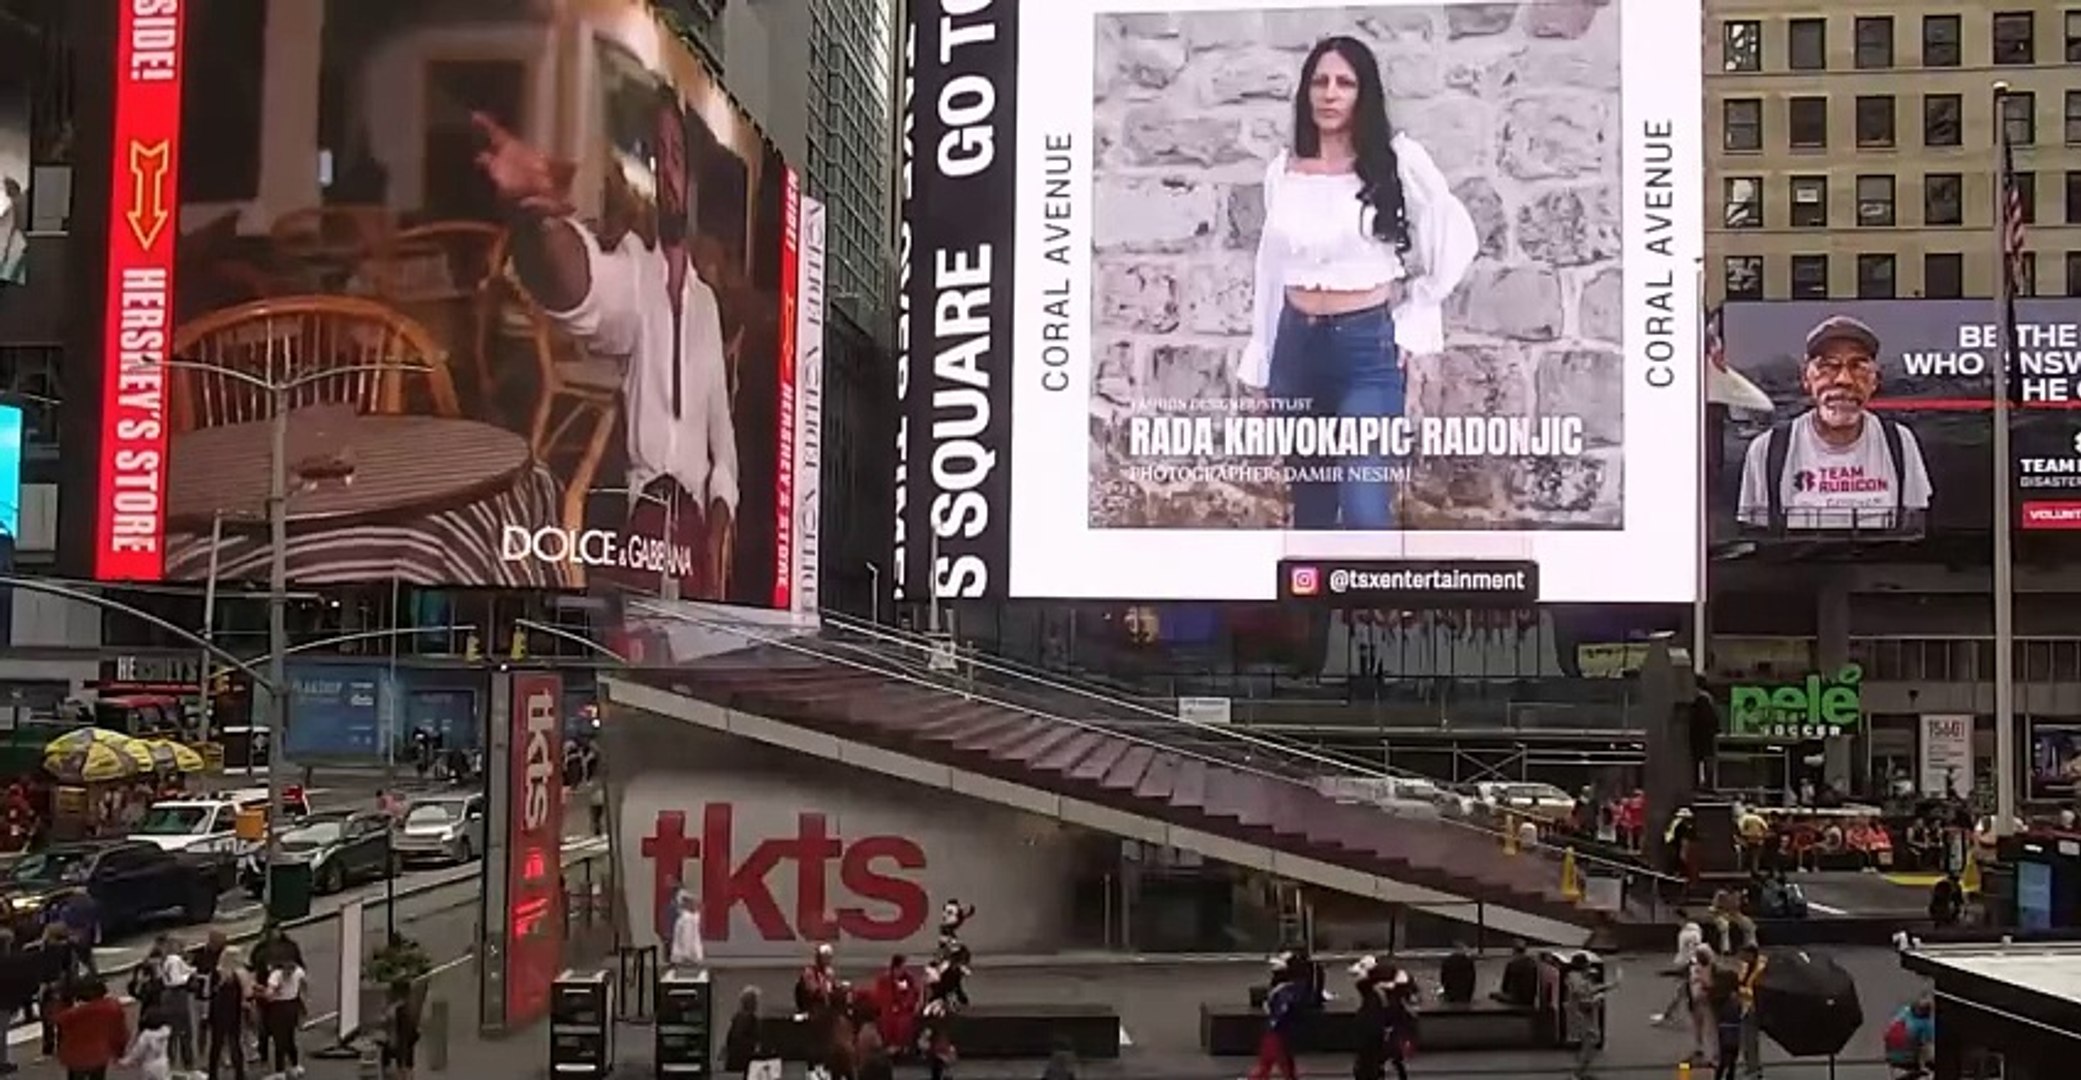 Rada Krivokapic Radonjic photographer Damir Nesimi 1568 Broadway Times Square, New York City, United States of America Manhattan - video Dailymotion